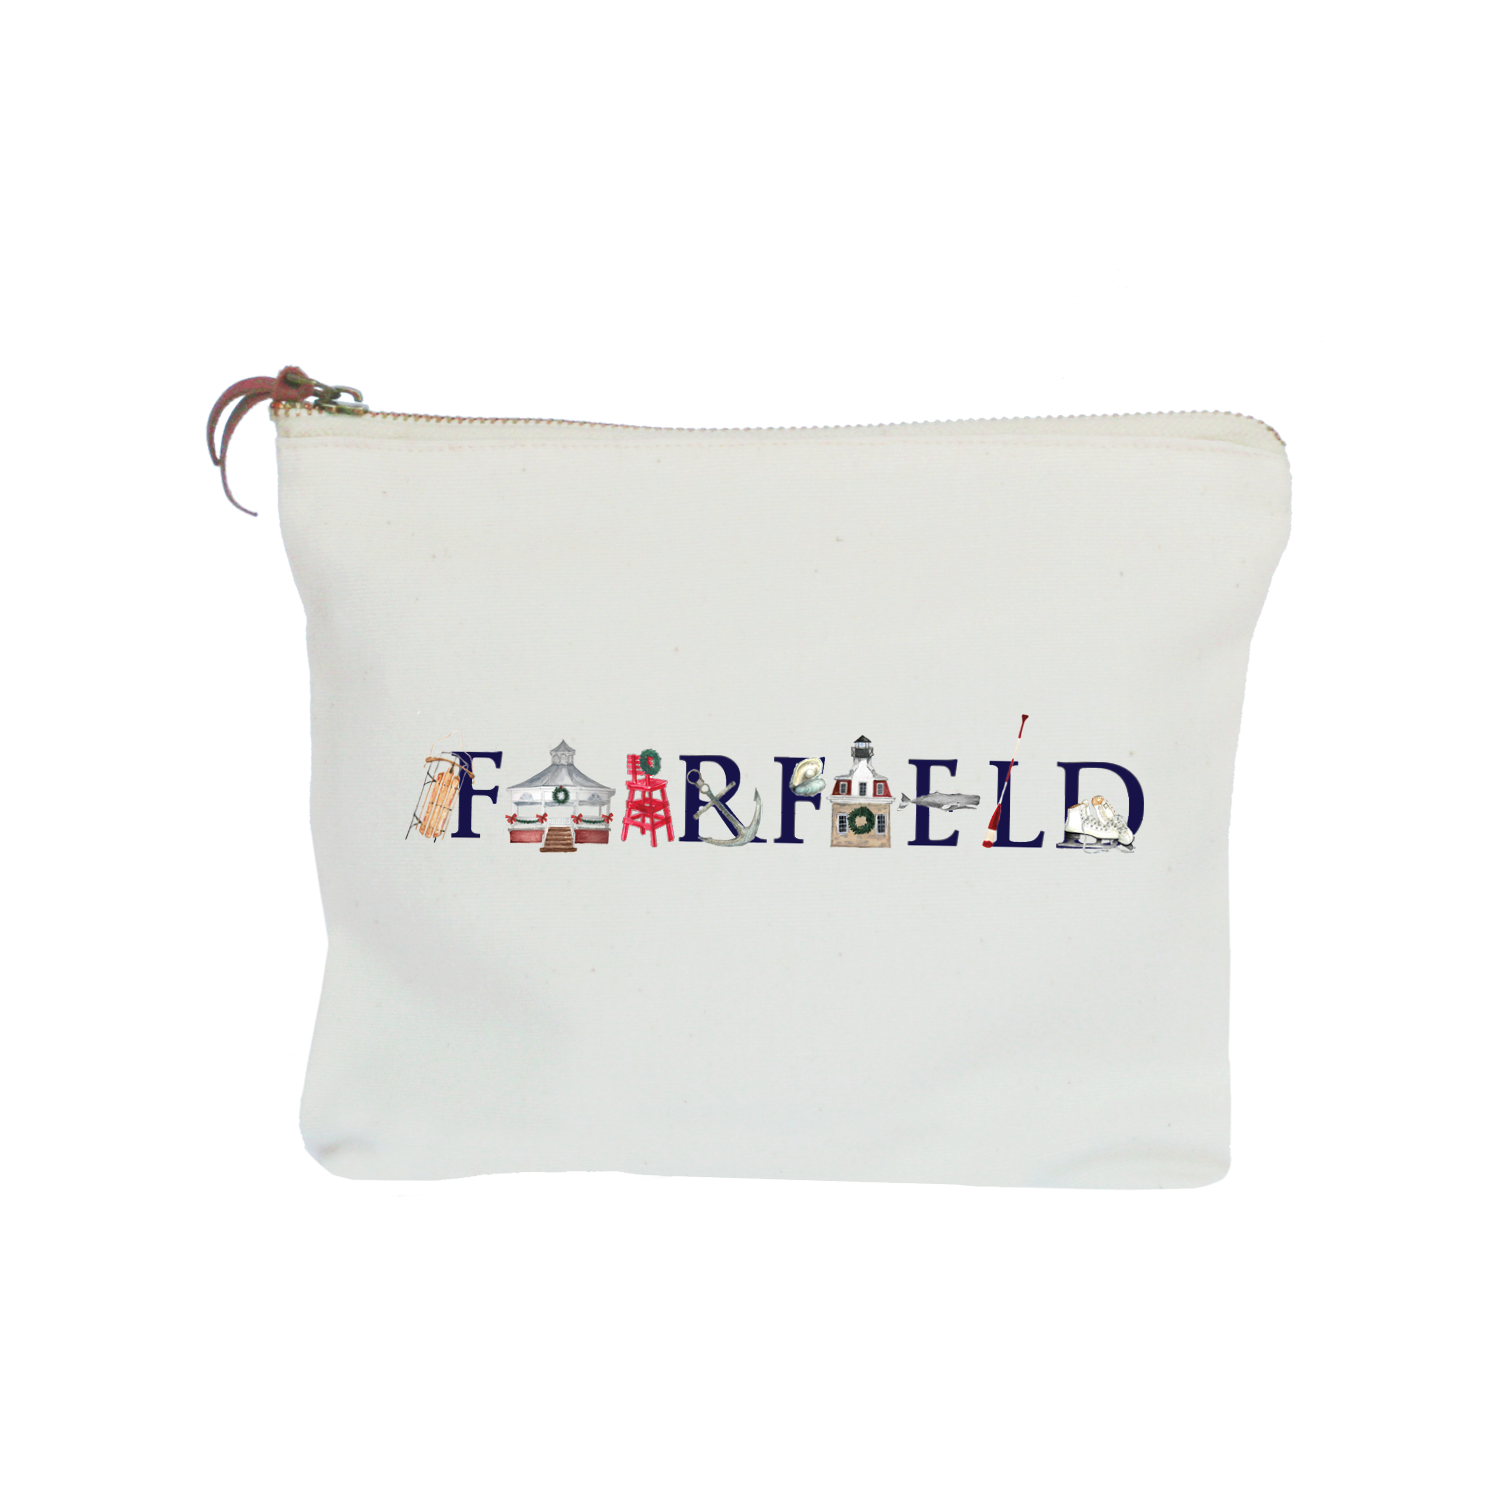 fairfield ct holiday zipper pouch